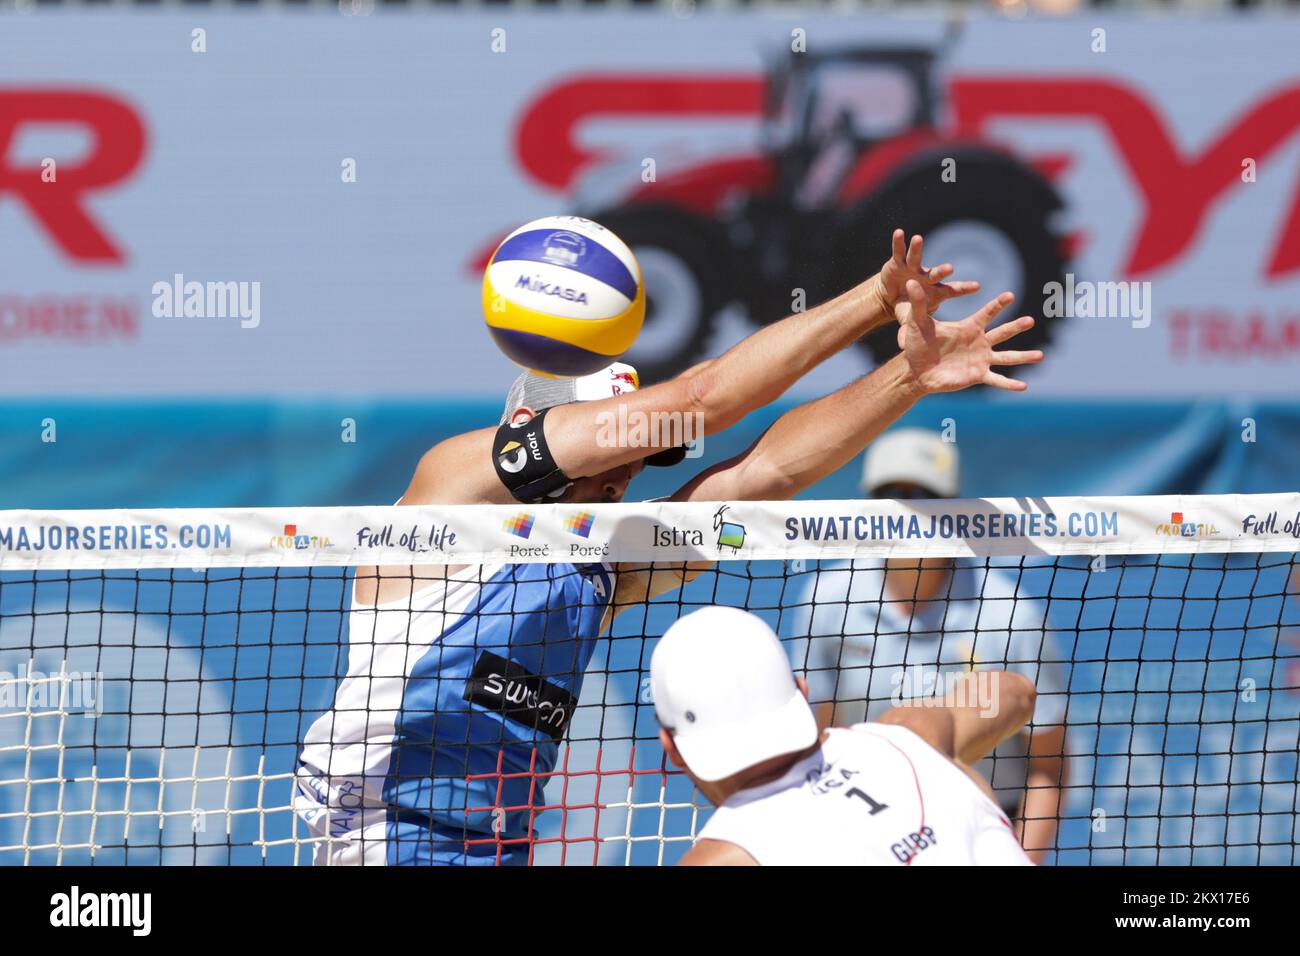 https://c8.alamy.com/comp/2KX17E6/01072017-croatia-porec-volleyball-tournament-swatch-beach-volleyball-major-series-the-fourth-quarter-finals-between-usa-gibbcrabb-taylor-and-italy-luponicolai-paolo-nicolai-jacob-gibb-photo-luka-stanzlpixsell-2KX17E6.jpg